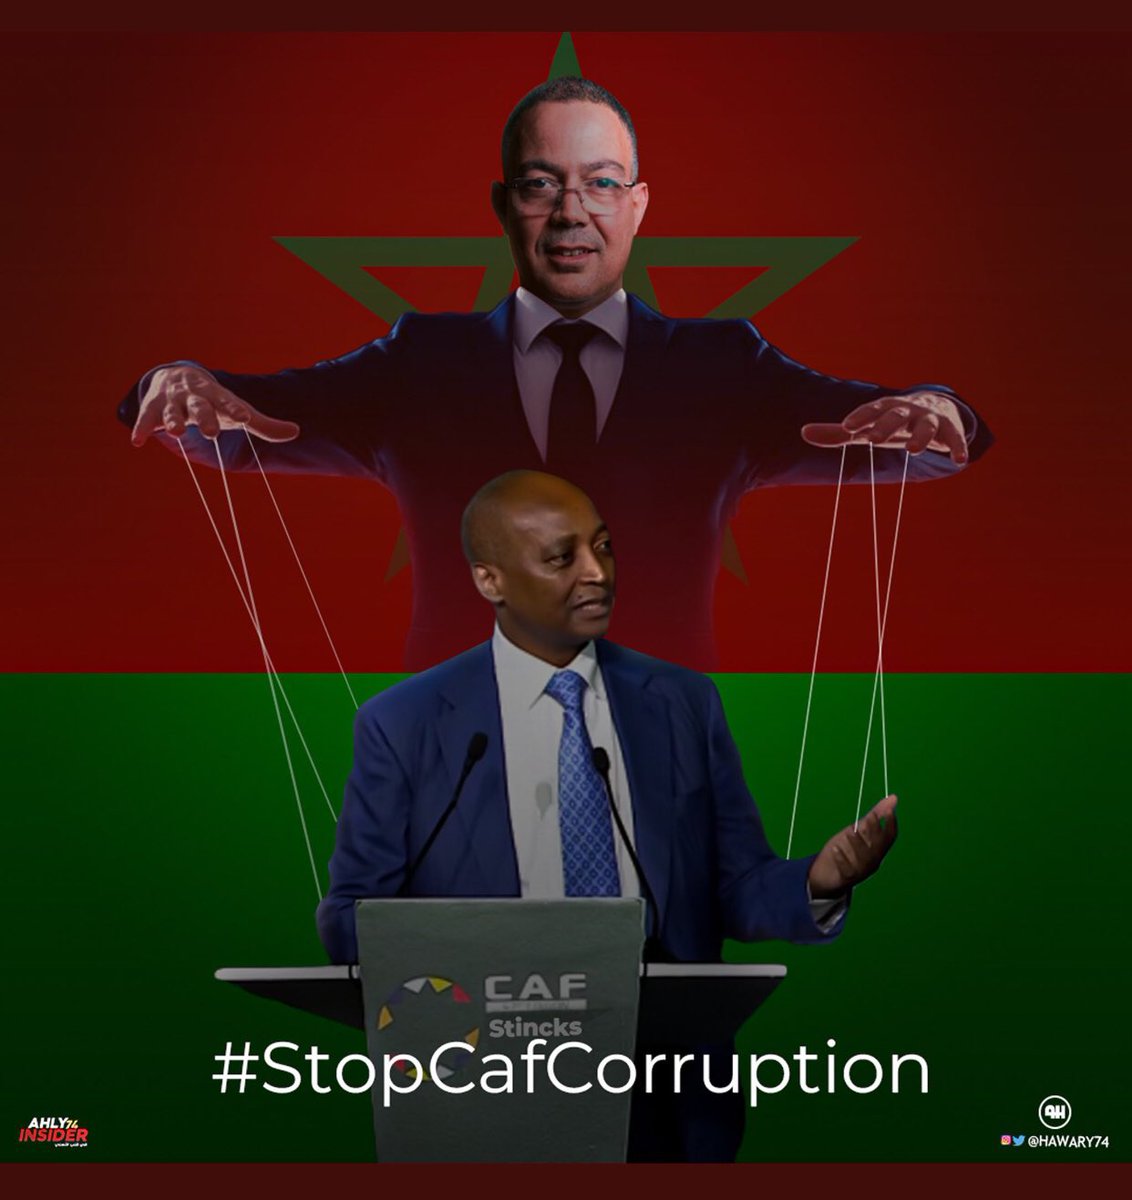 #stopcafcorruption